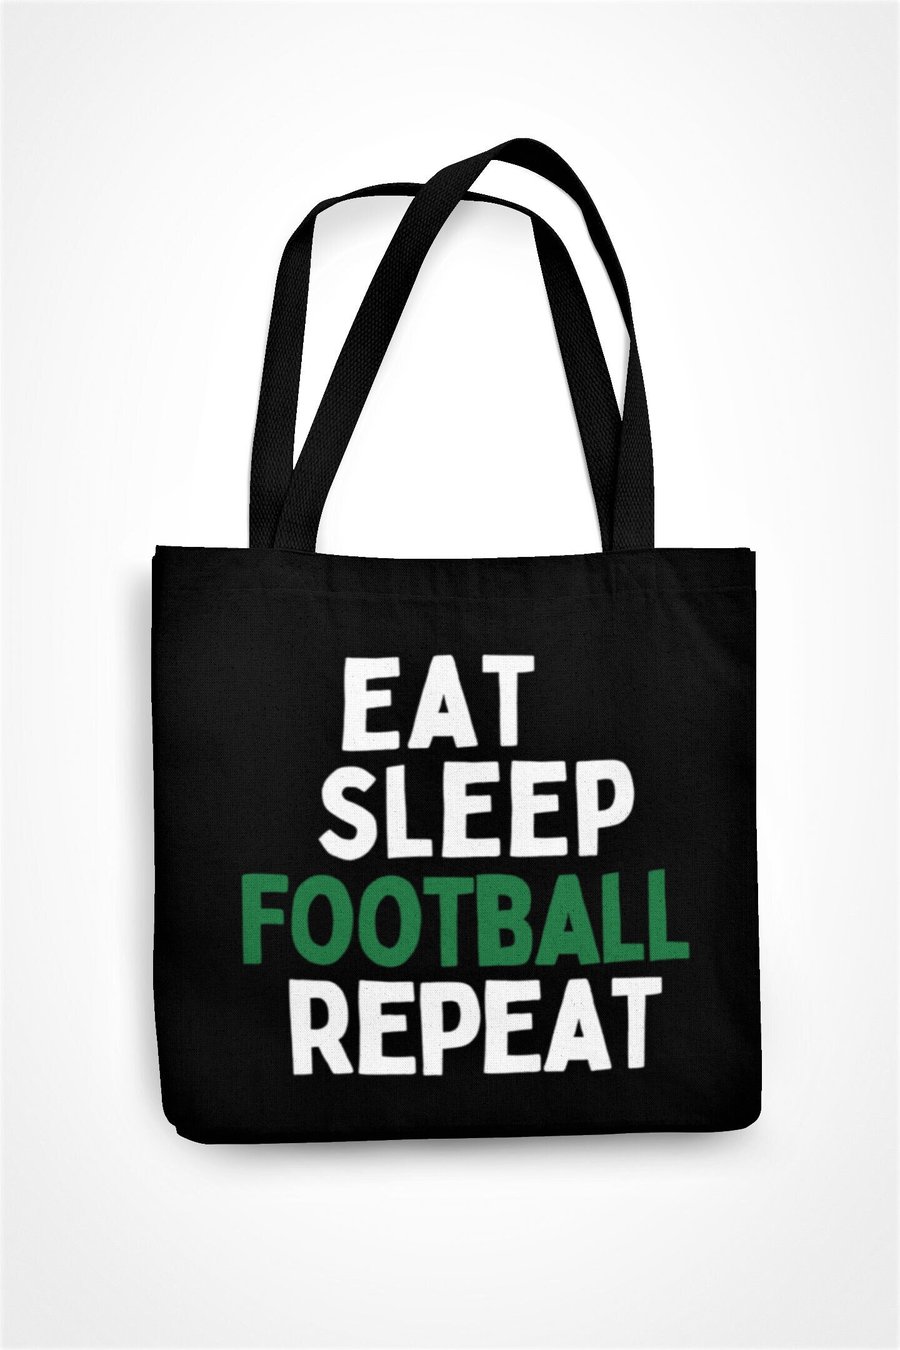 Eat Sleep Football Repeat Tote Bag Funny Footy Shopping Bag Joke Christmas 